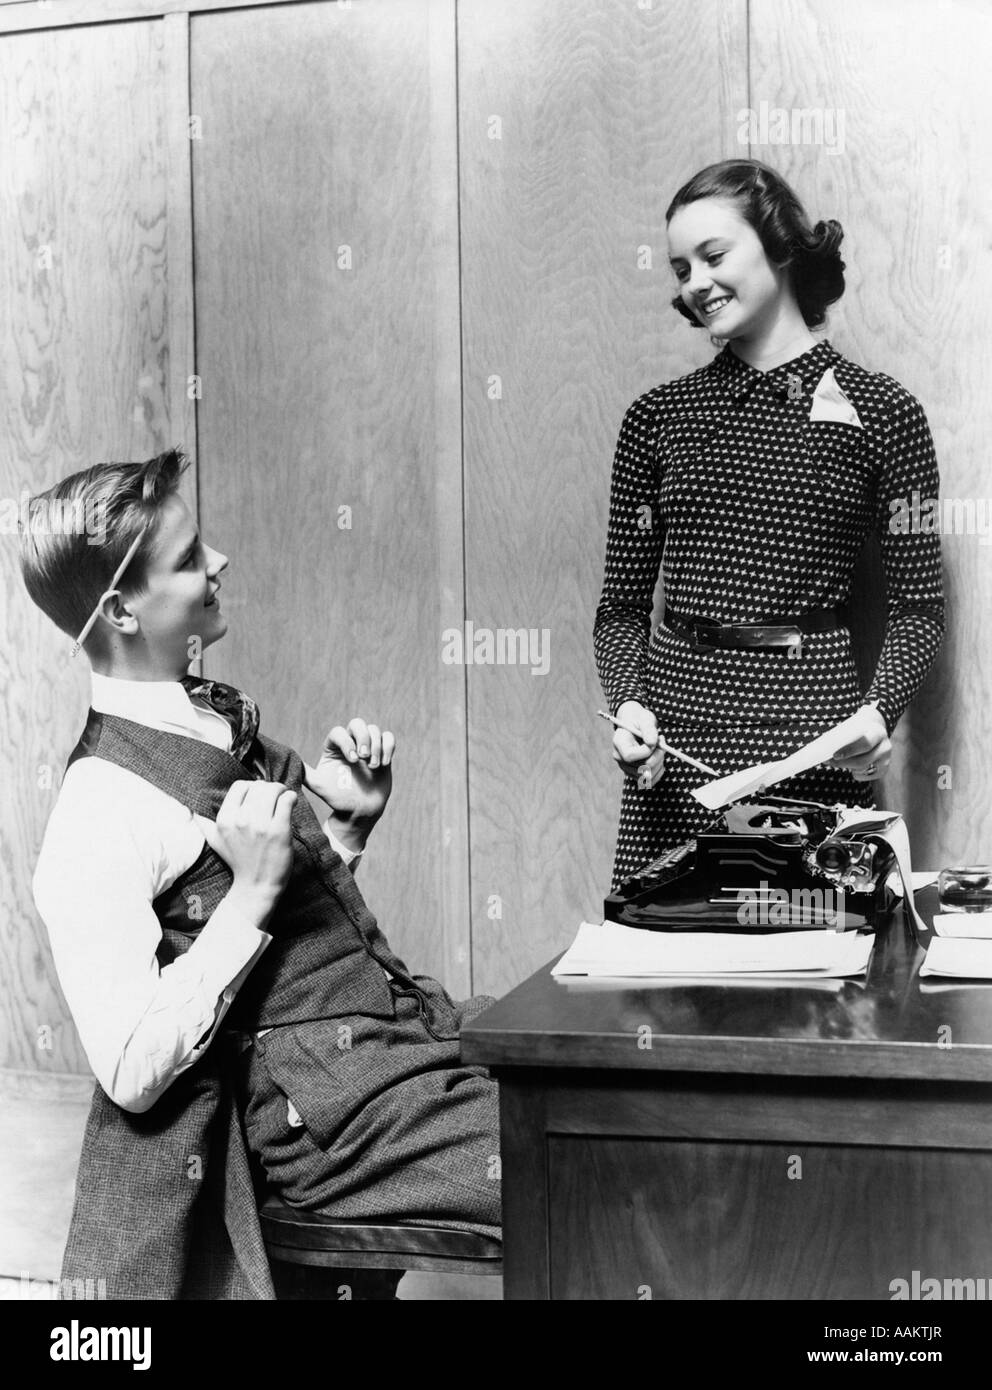 1940s-teen-young-couple-boy-at-desk-as-businessman-girl-polka-dot-AAKTJR.jpg